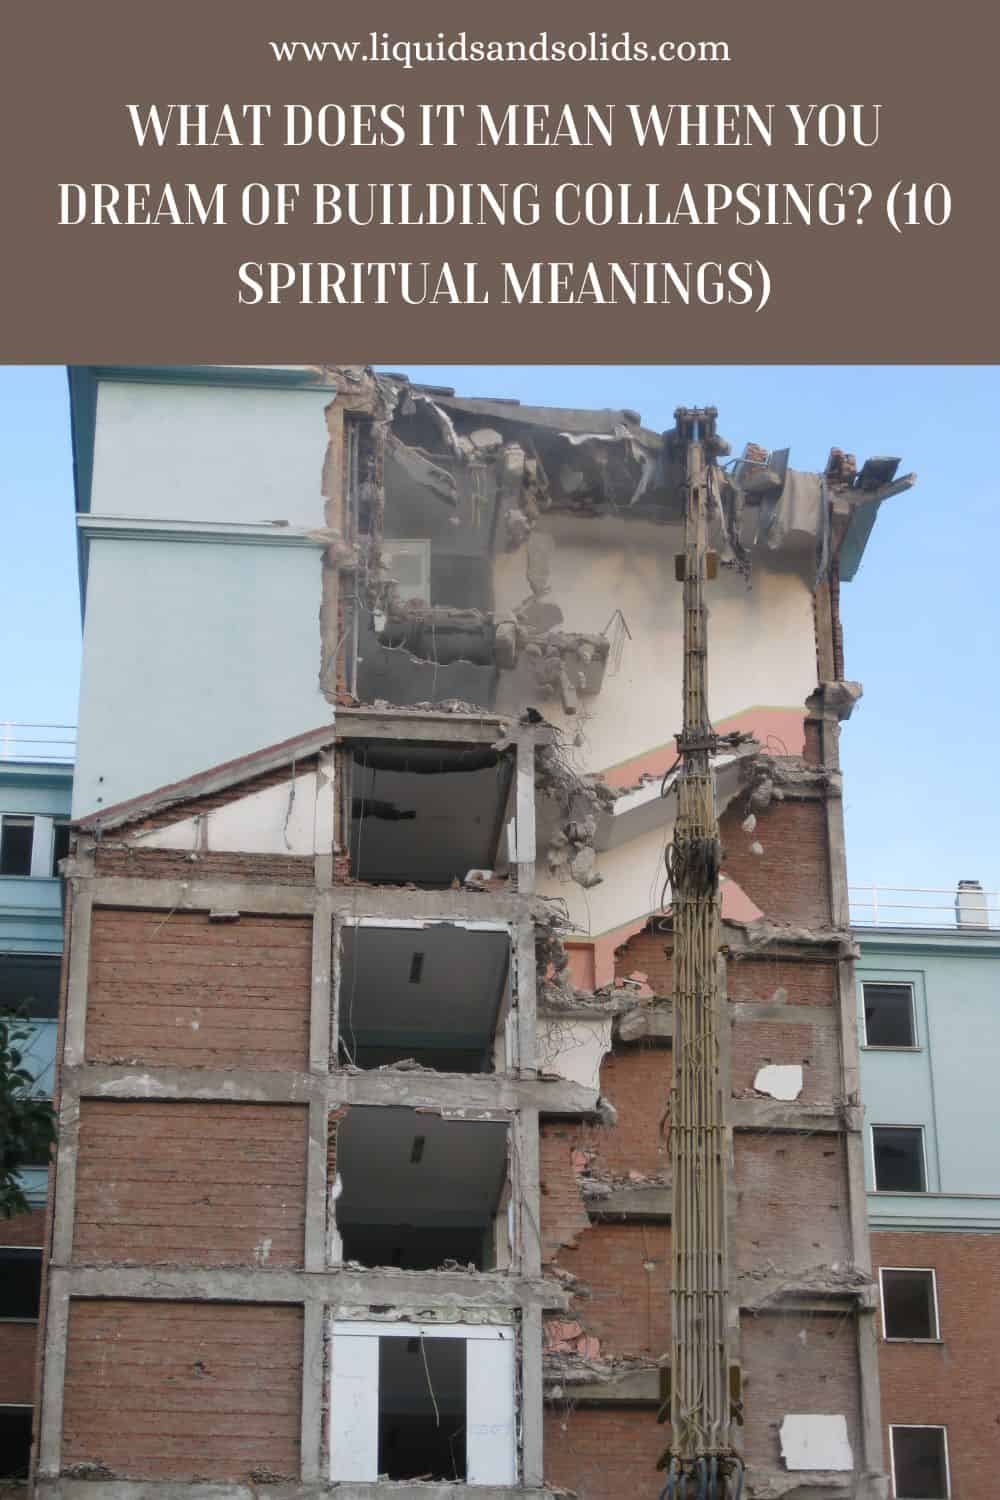  Rêve d'un bâtiment qui s'effondre (10 significations spirituelles)